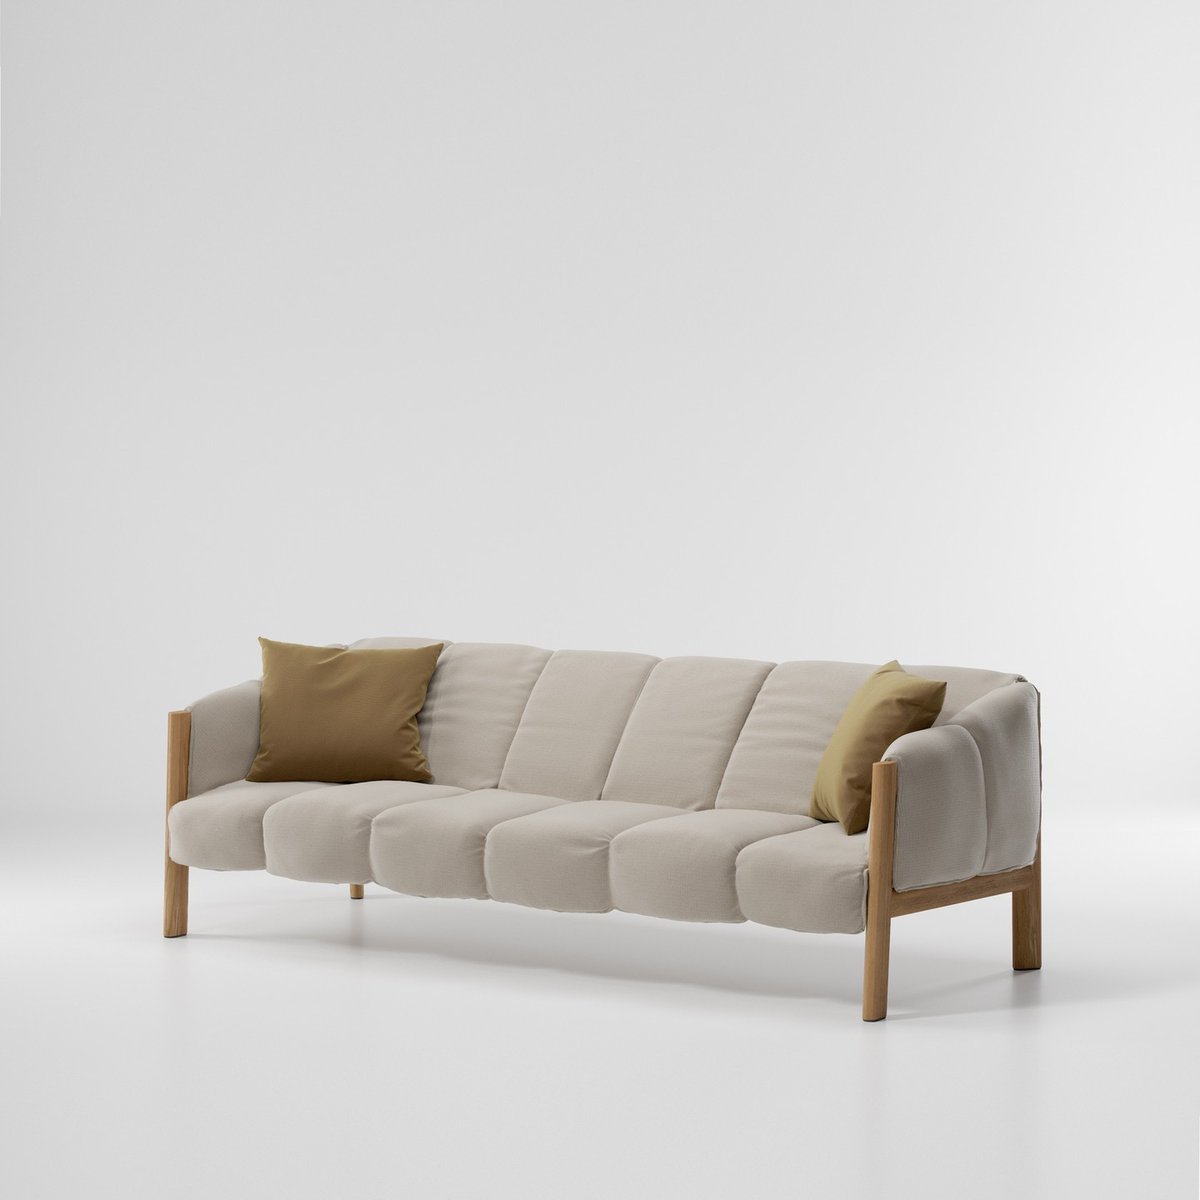 Plumon sofa, by patricia_urquiola⁠
⁠
_⁠
#kettal #createinnovatedesign #patriciaurquiola #newcollection #salonedelmobile #salonedelmobile2022 #MDW #MDW2022 #salonedelmobile60th #kettaloutdoor #outdoor #outdoorliving #outdoordesign #architec...  zpr.io/j3TKZZnGp2Pm